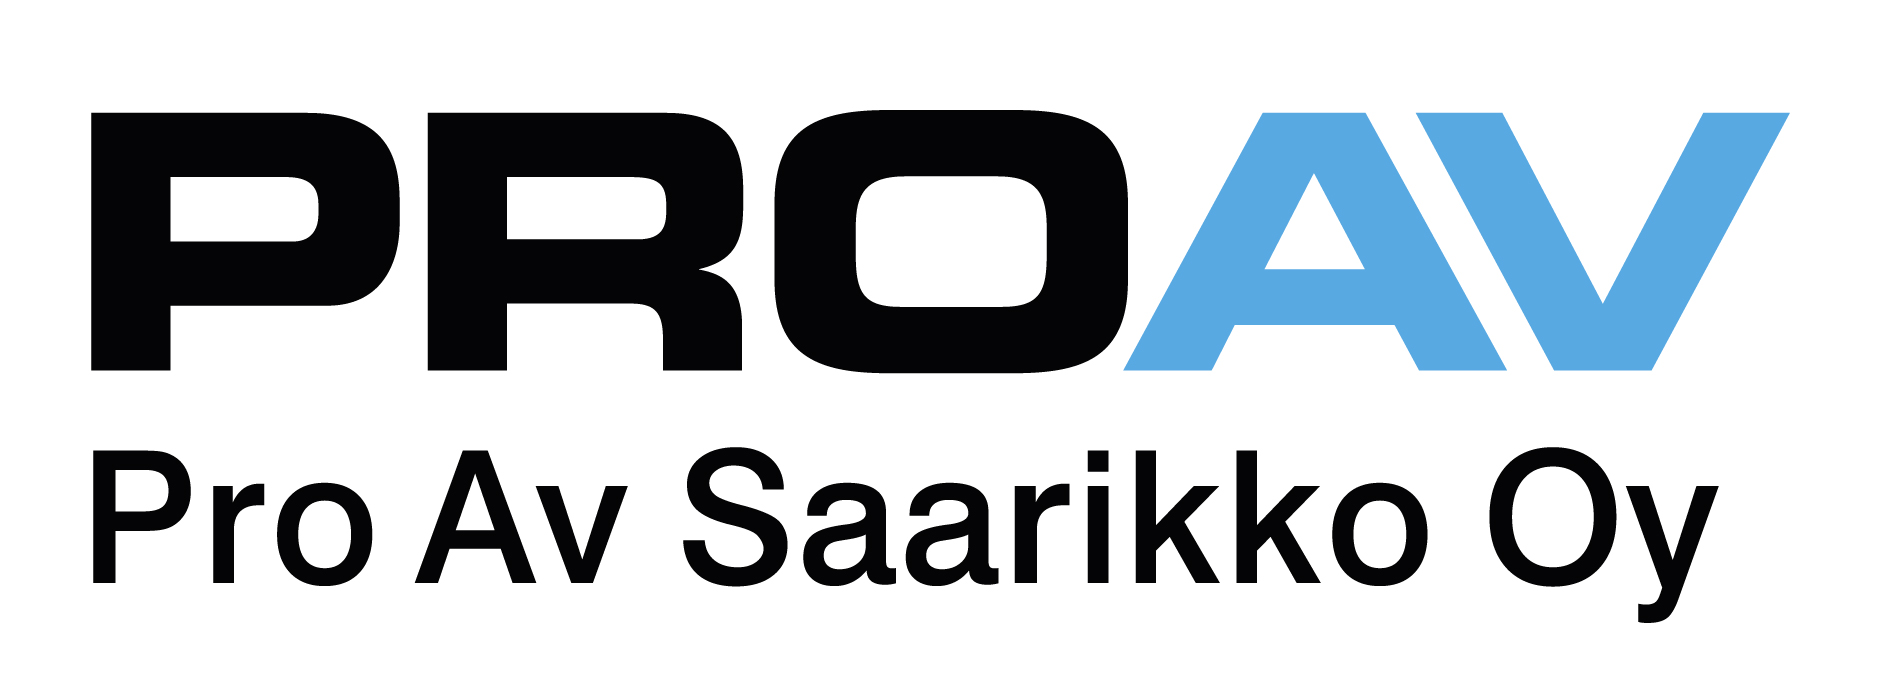 ProAv Saarikon logo